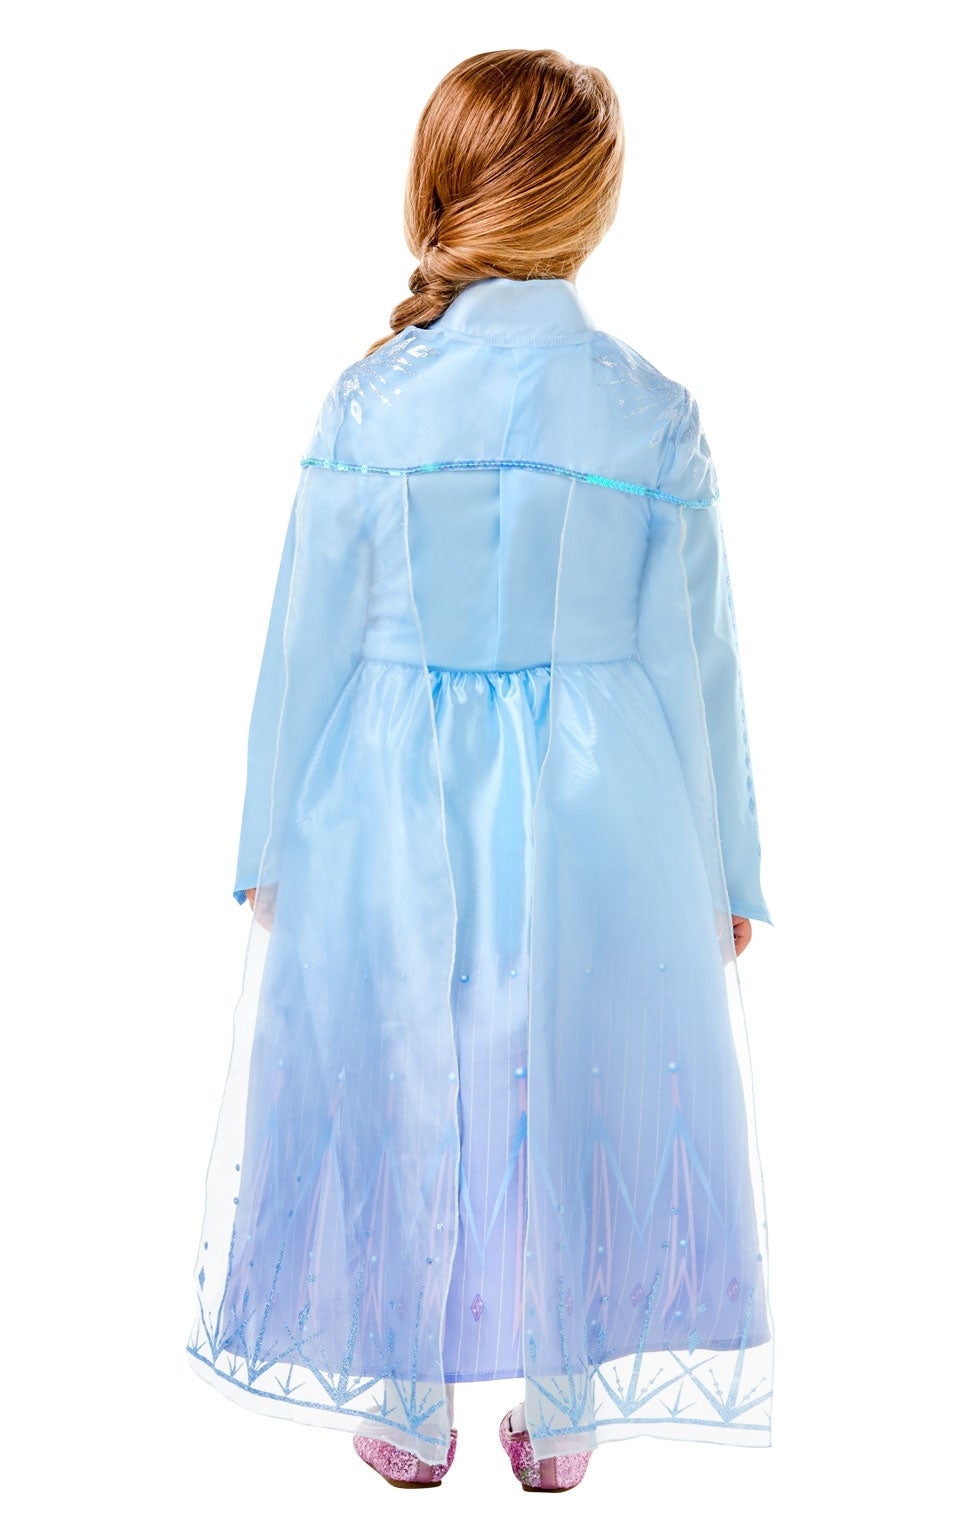 Frozen 2 New Elsa Travel Dress Deluxe Costume_2 rub-3005065-6